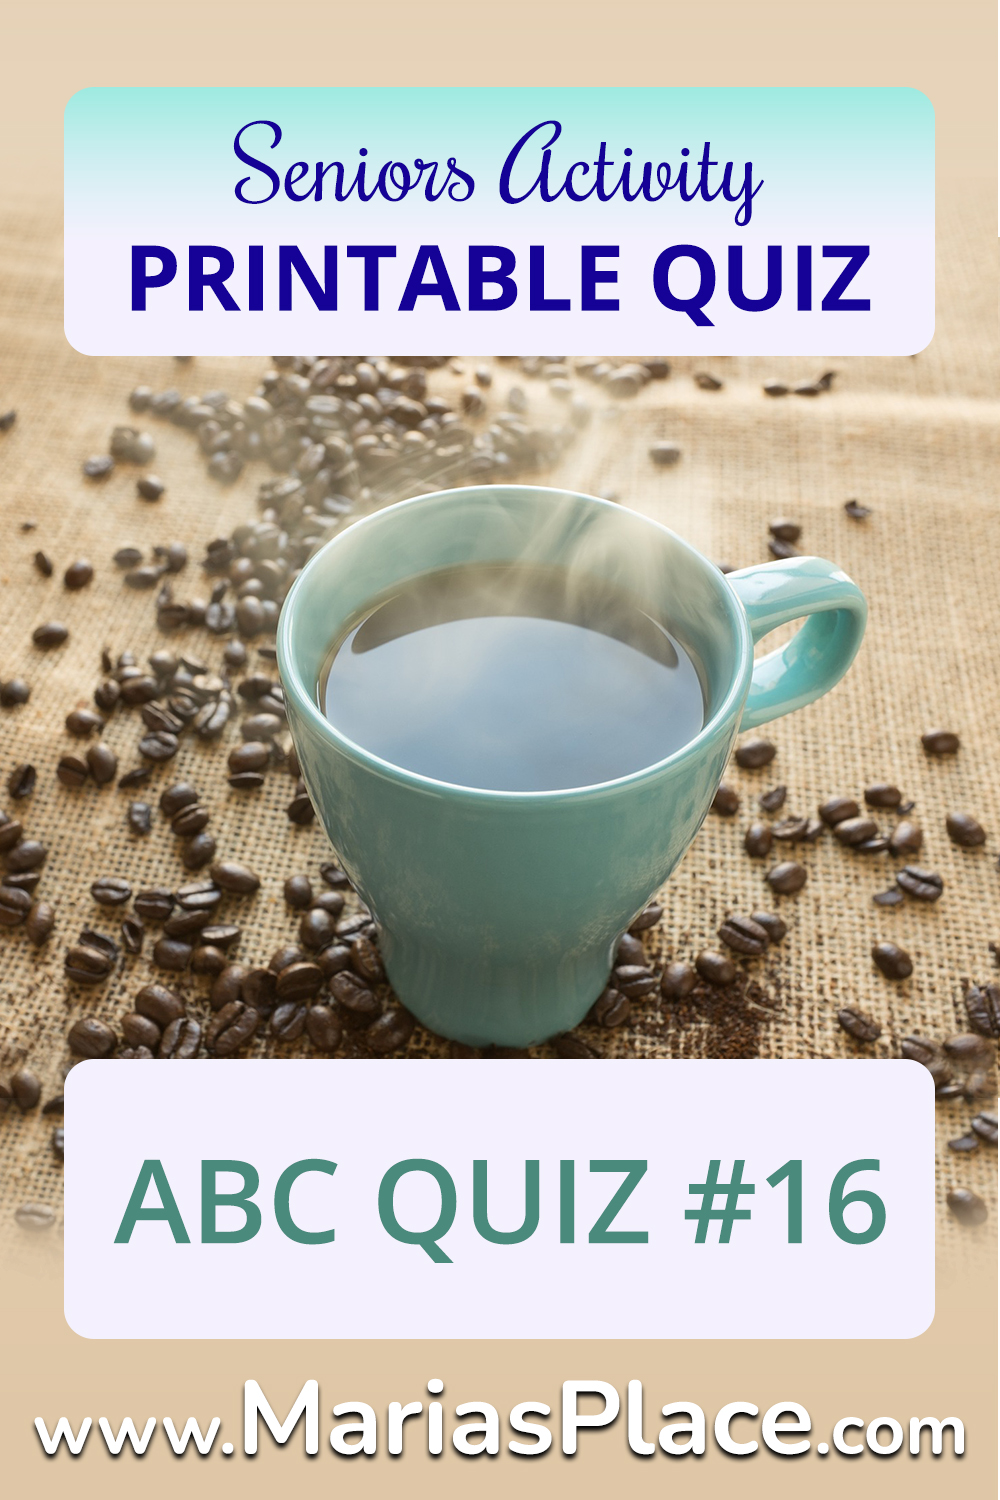 ABC Quiz #16